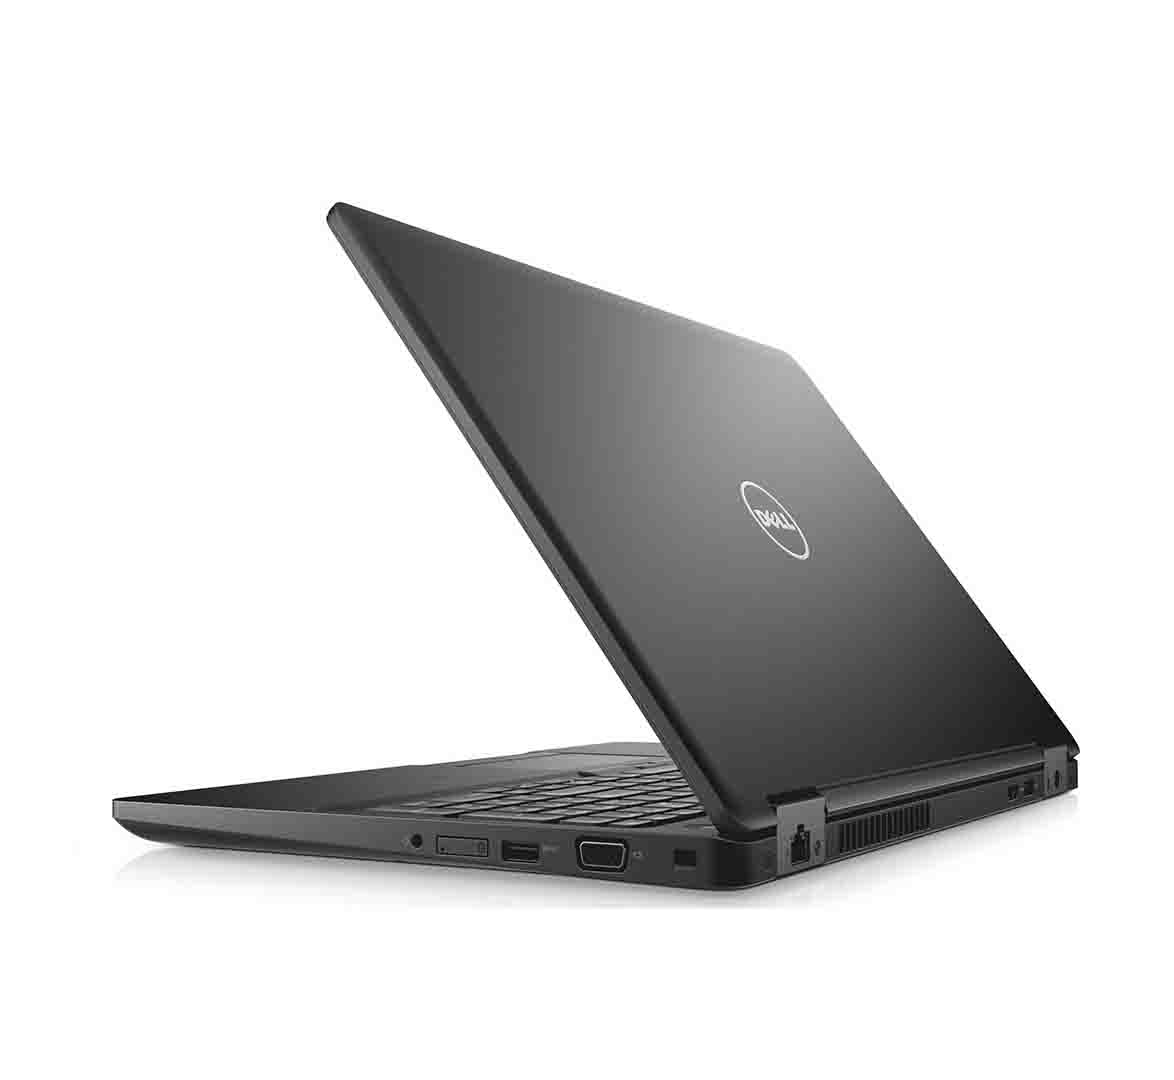 Dell Latitude 5580 Business Laptop, Intel Core i7-7th Generation CPU, 8GB RAM, 256GB SSD, 15.6 inch Display, Windows 10 Pro, Refurbished Laptop